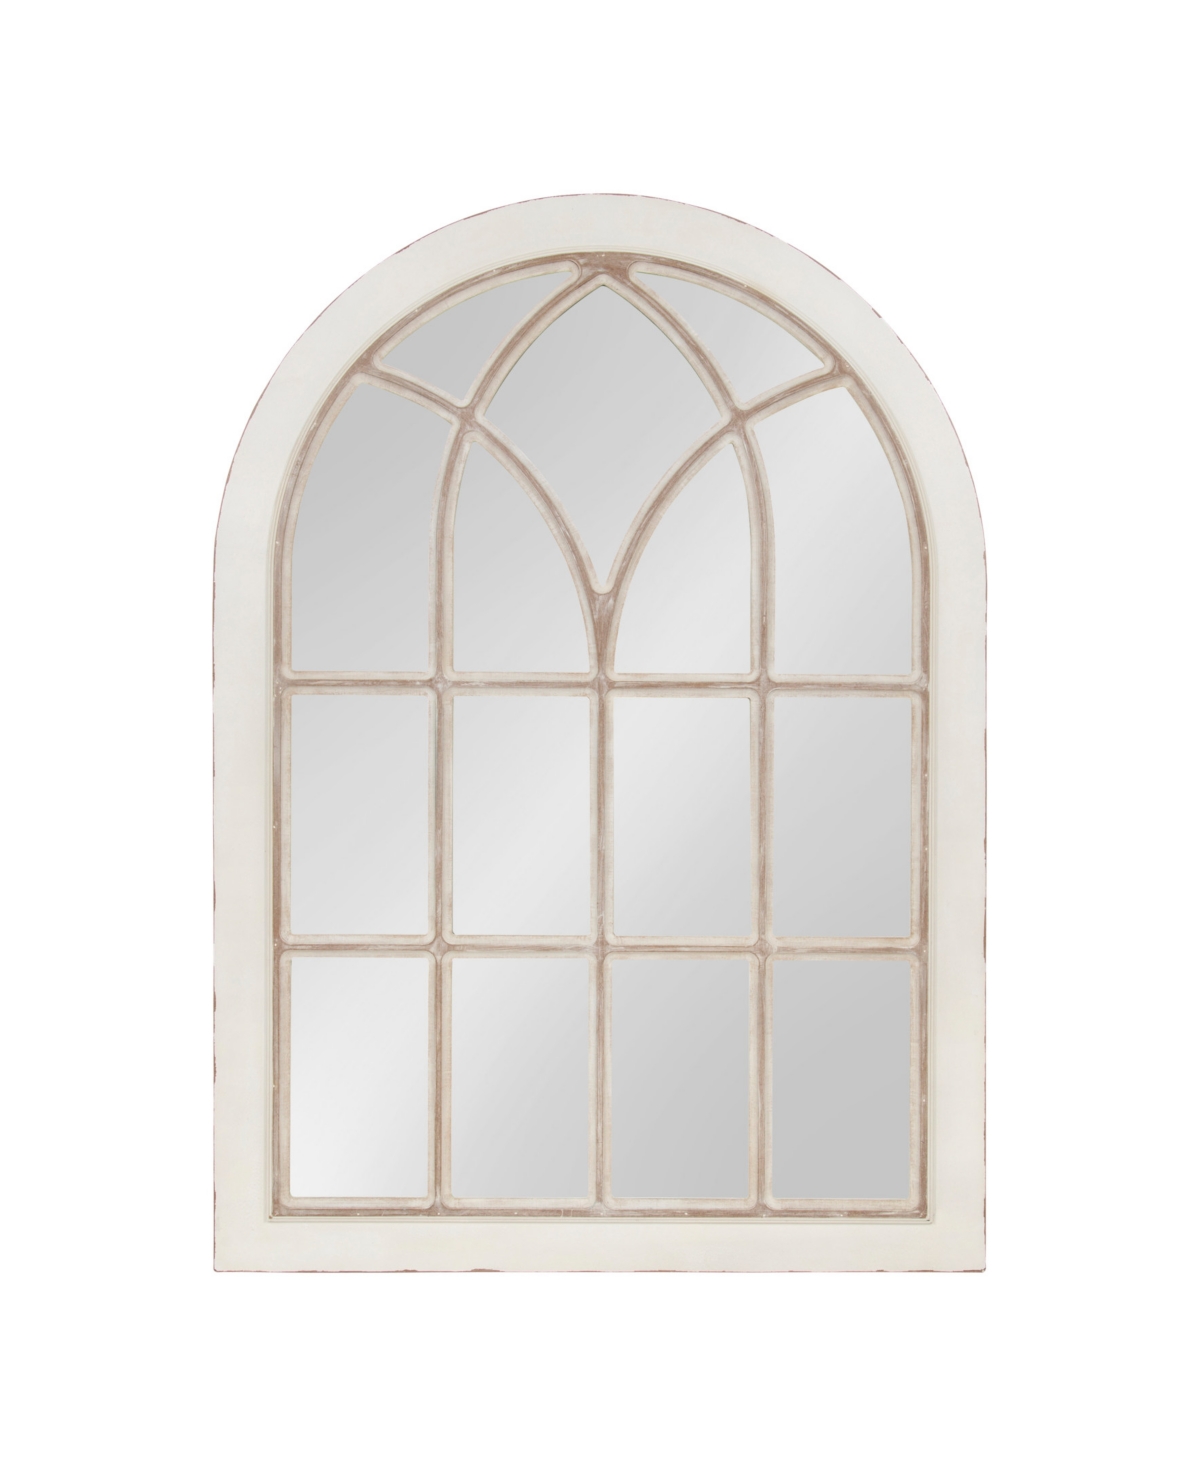 Nikoletta Large Windowpane Arch Mirror - White